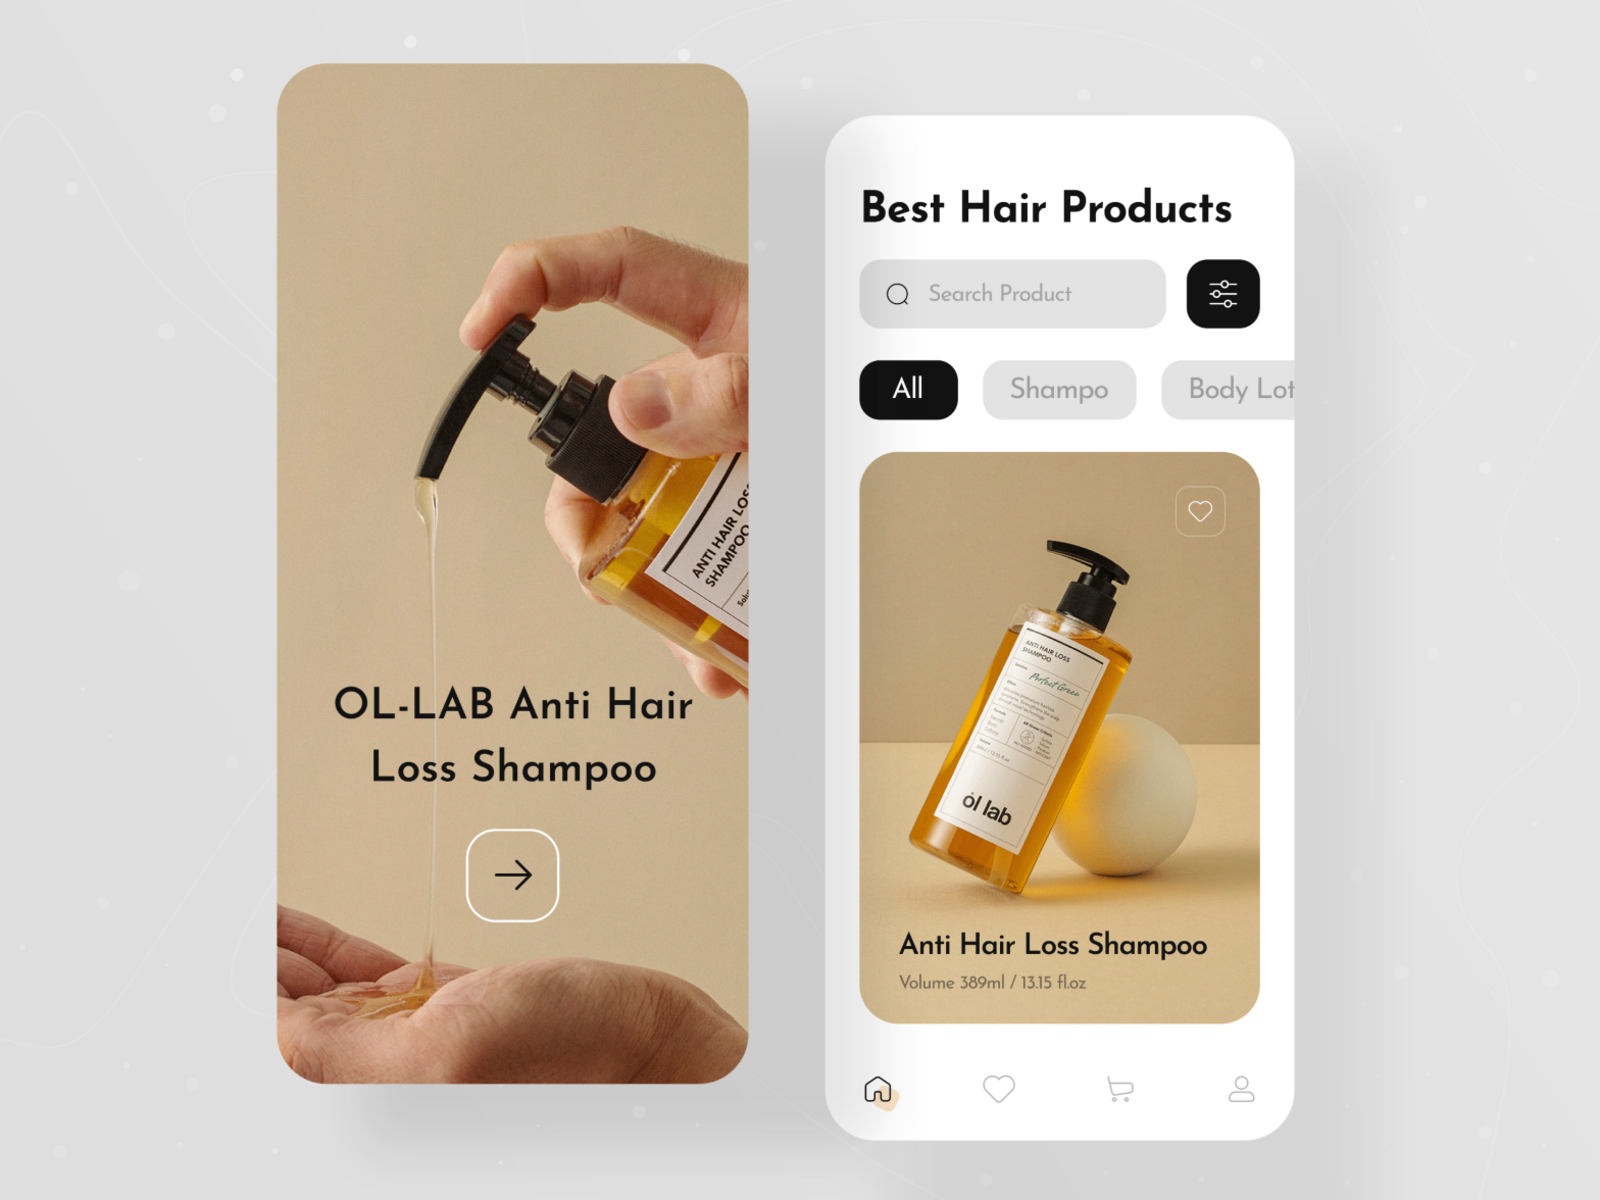 Natural Shampoo Store App